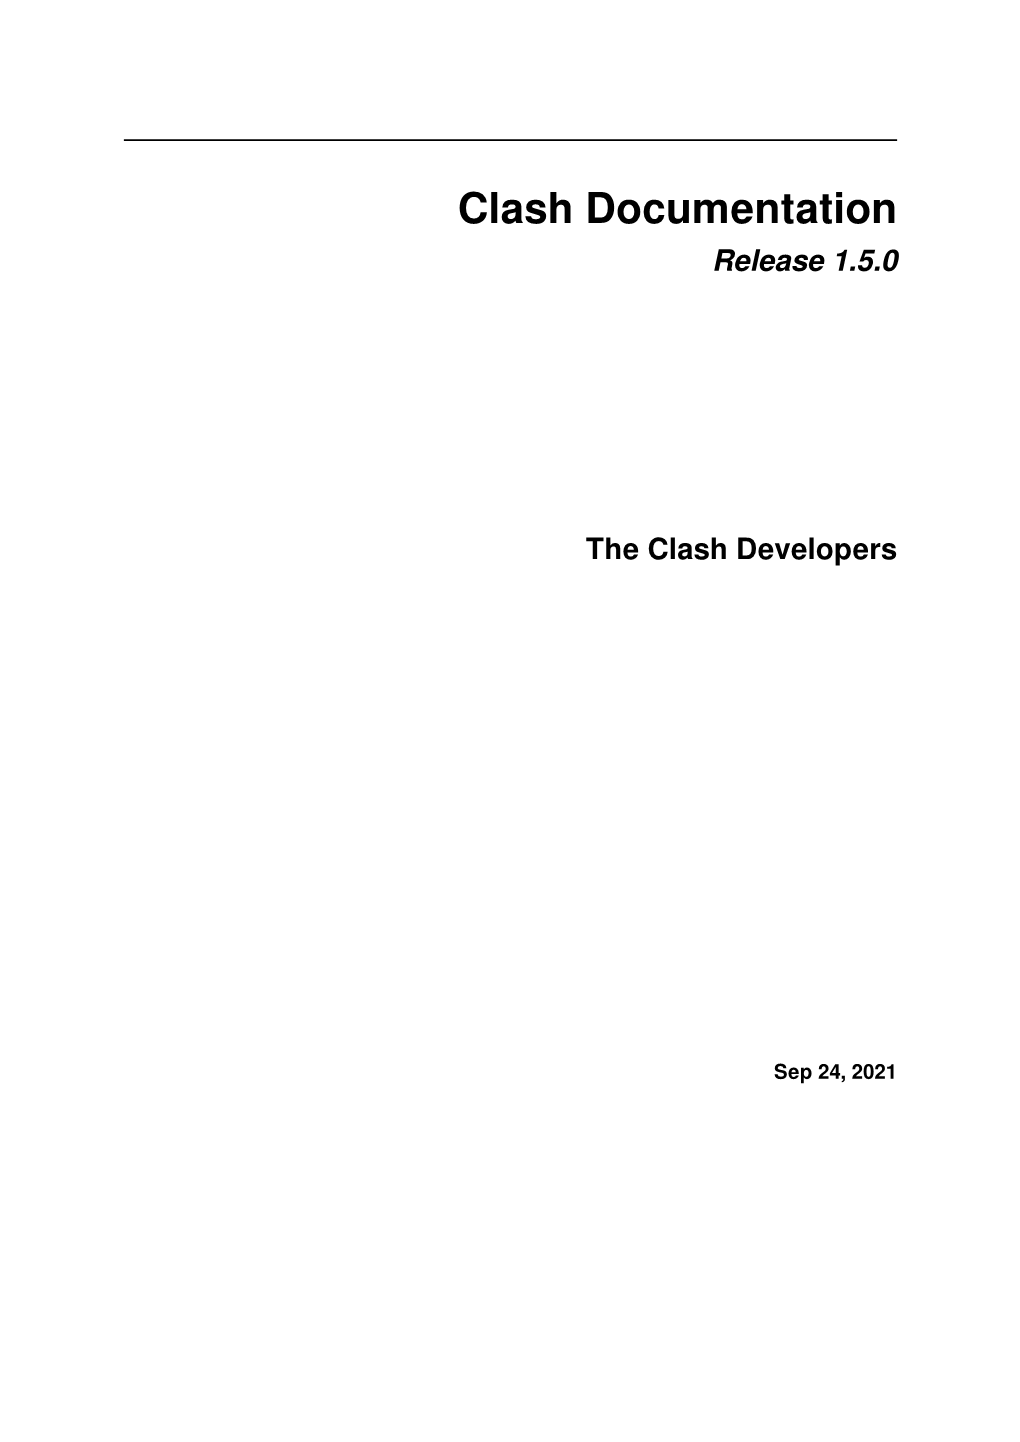 Clash Documentation Release 1.5.0